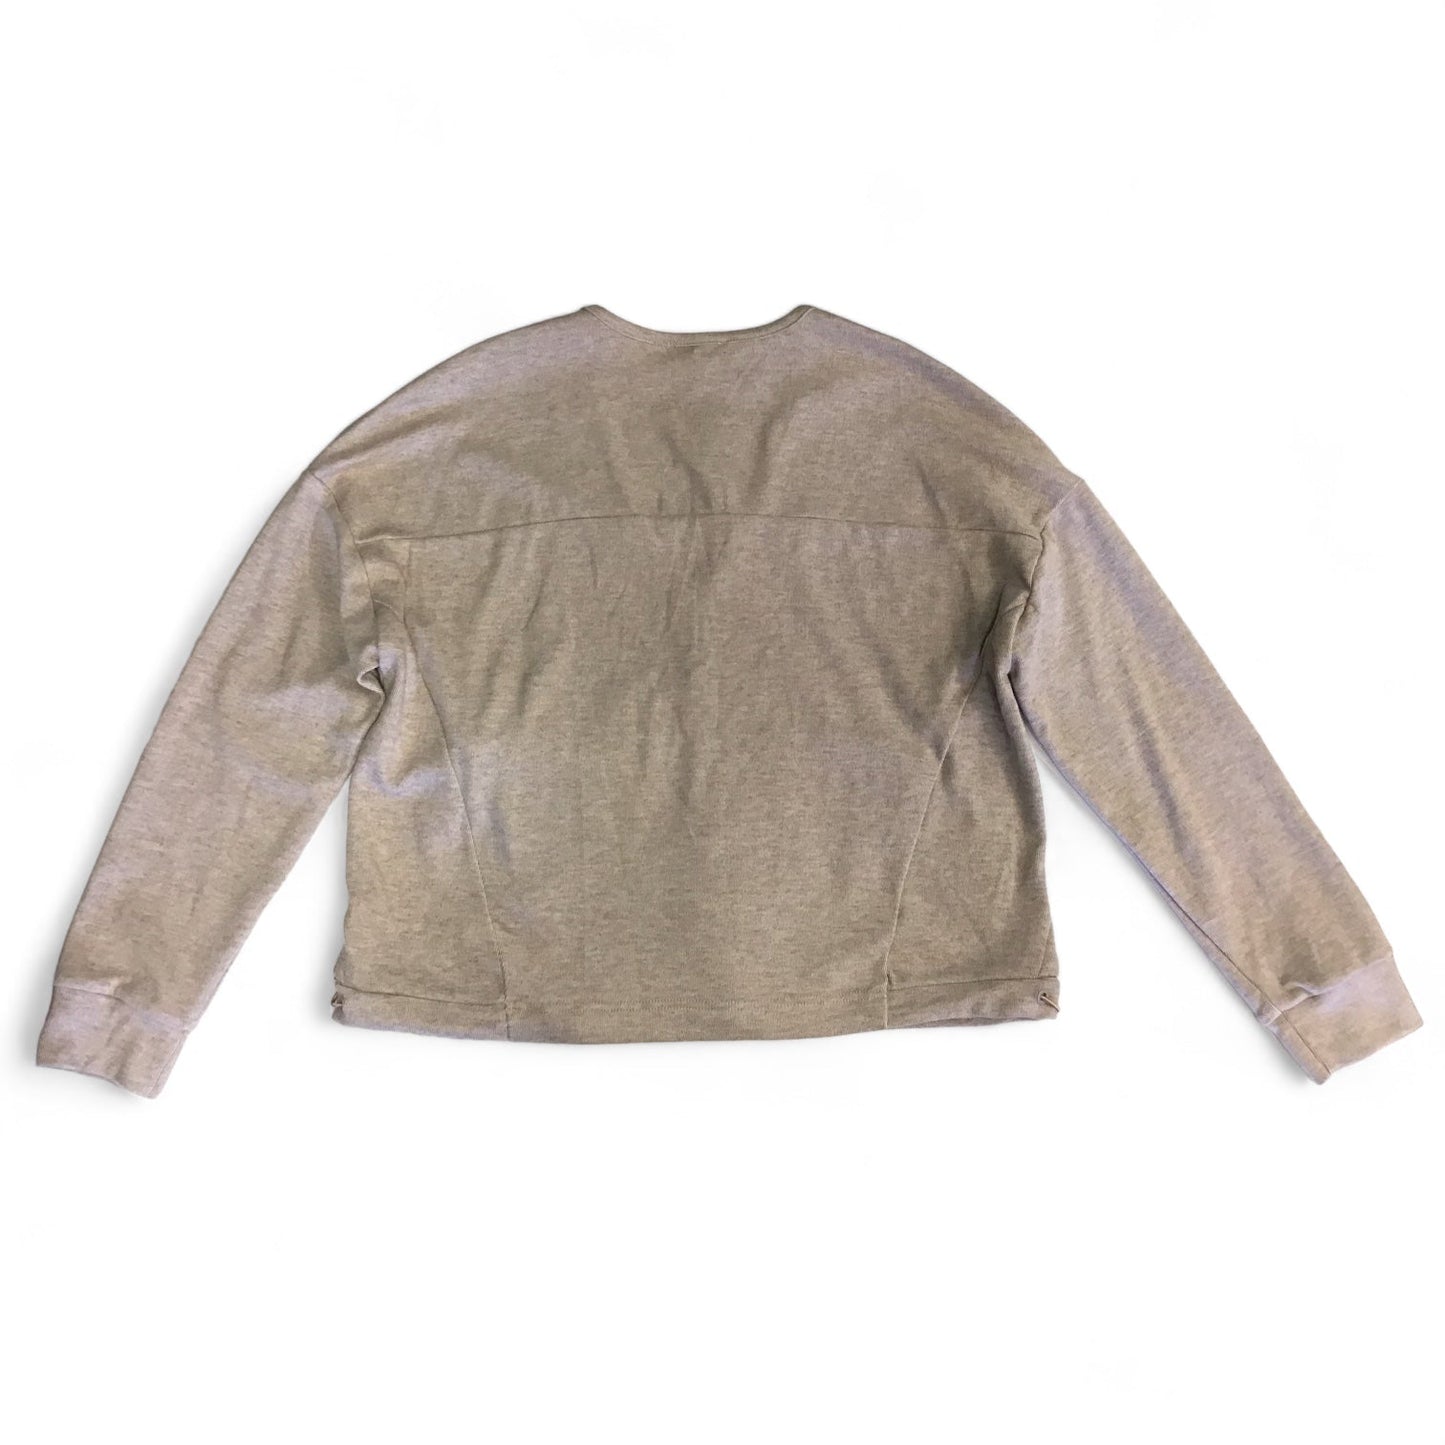 Sweatshirt Crewneck By Badgley Mischka  Size: M